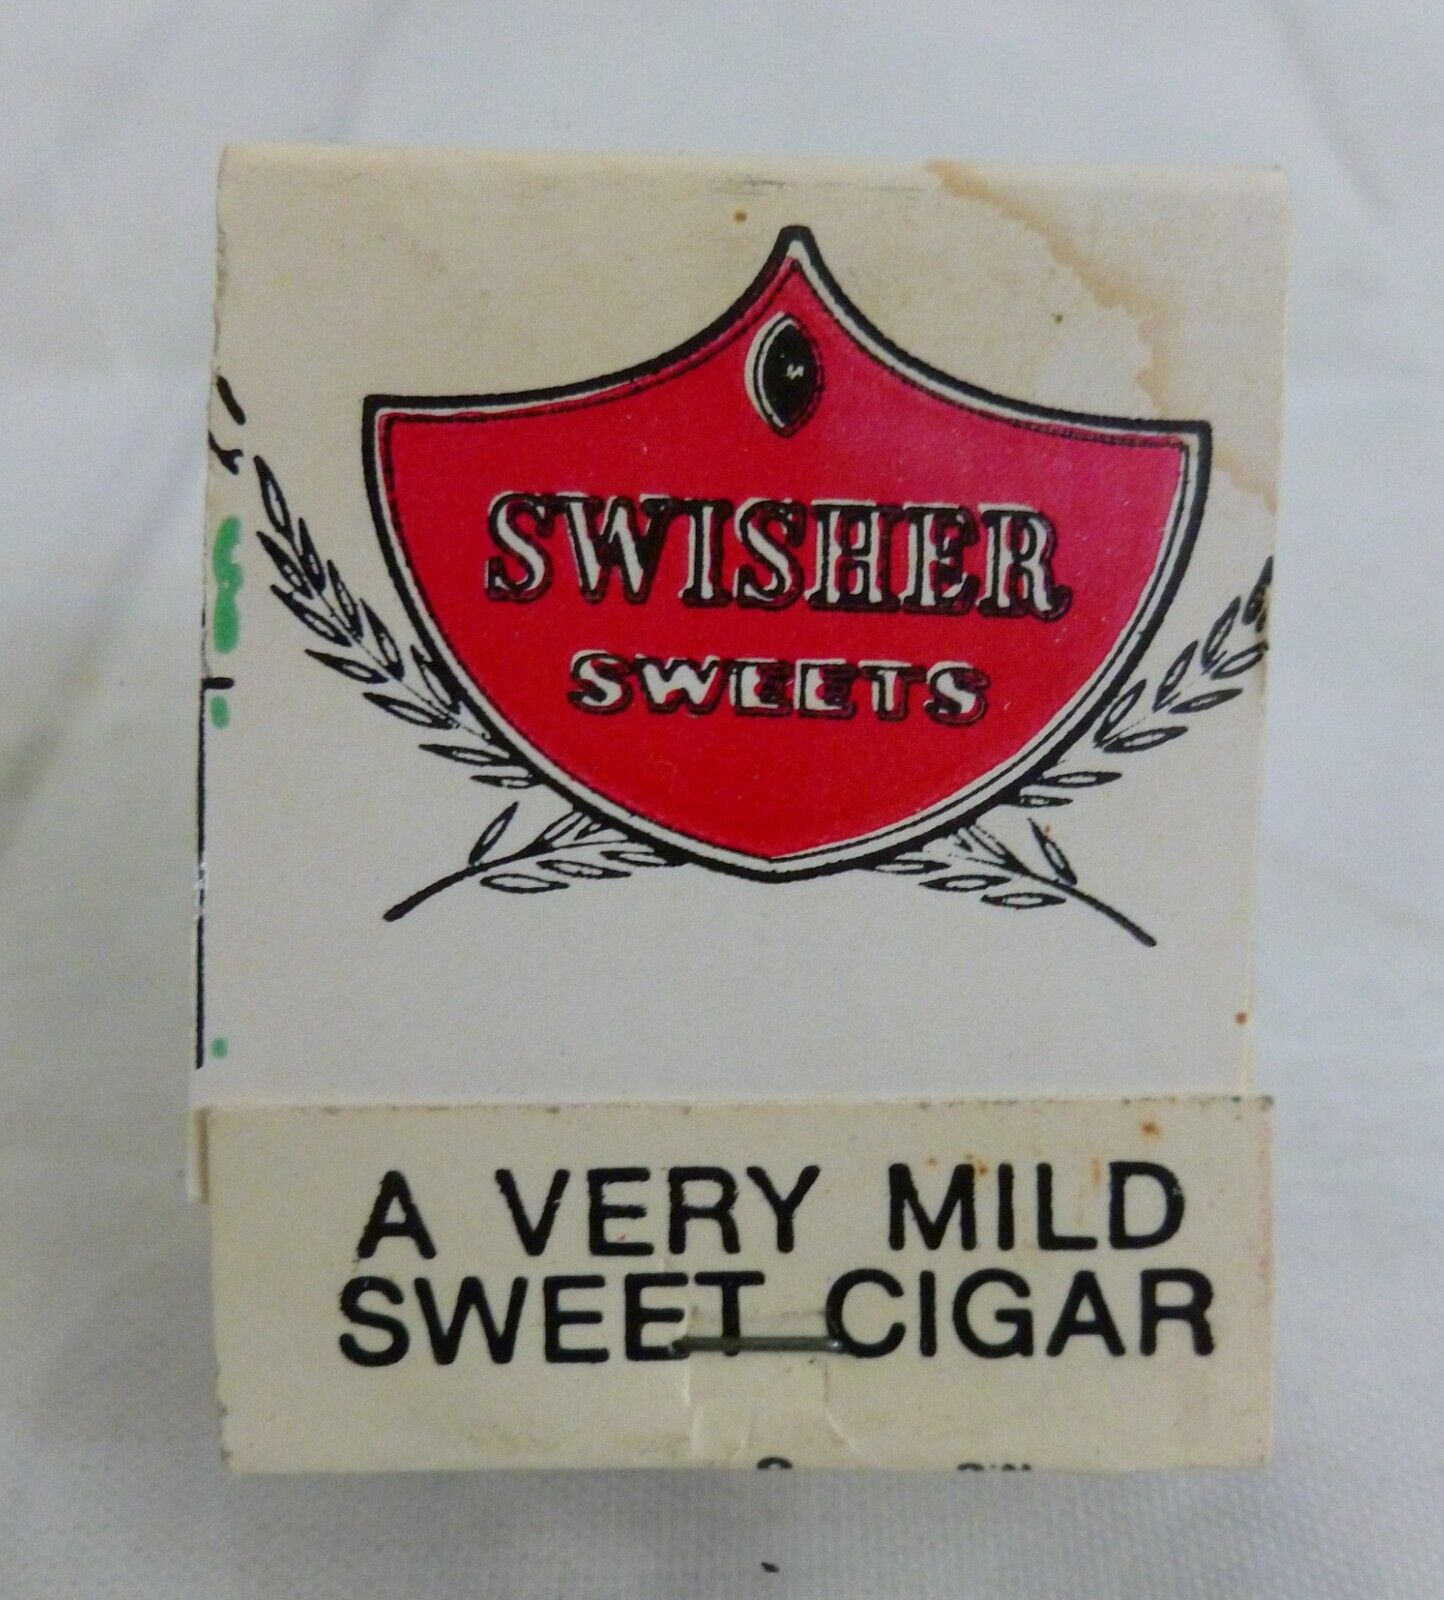 Vintage Matchbook - Swisher Sweets - A Very Mild Sweet Cigar - King Edwards